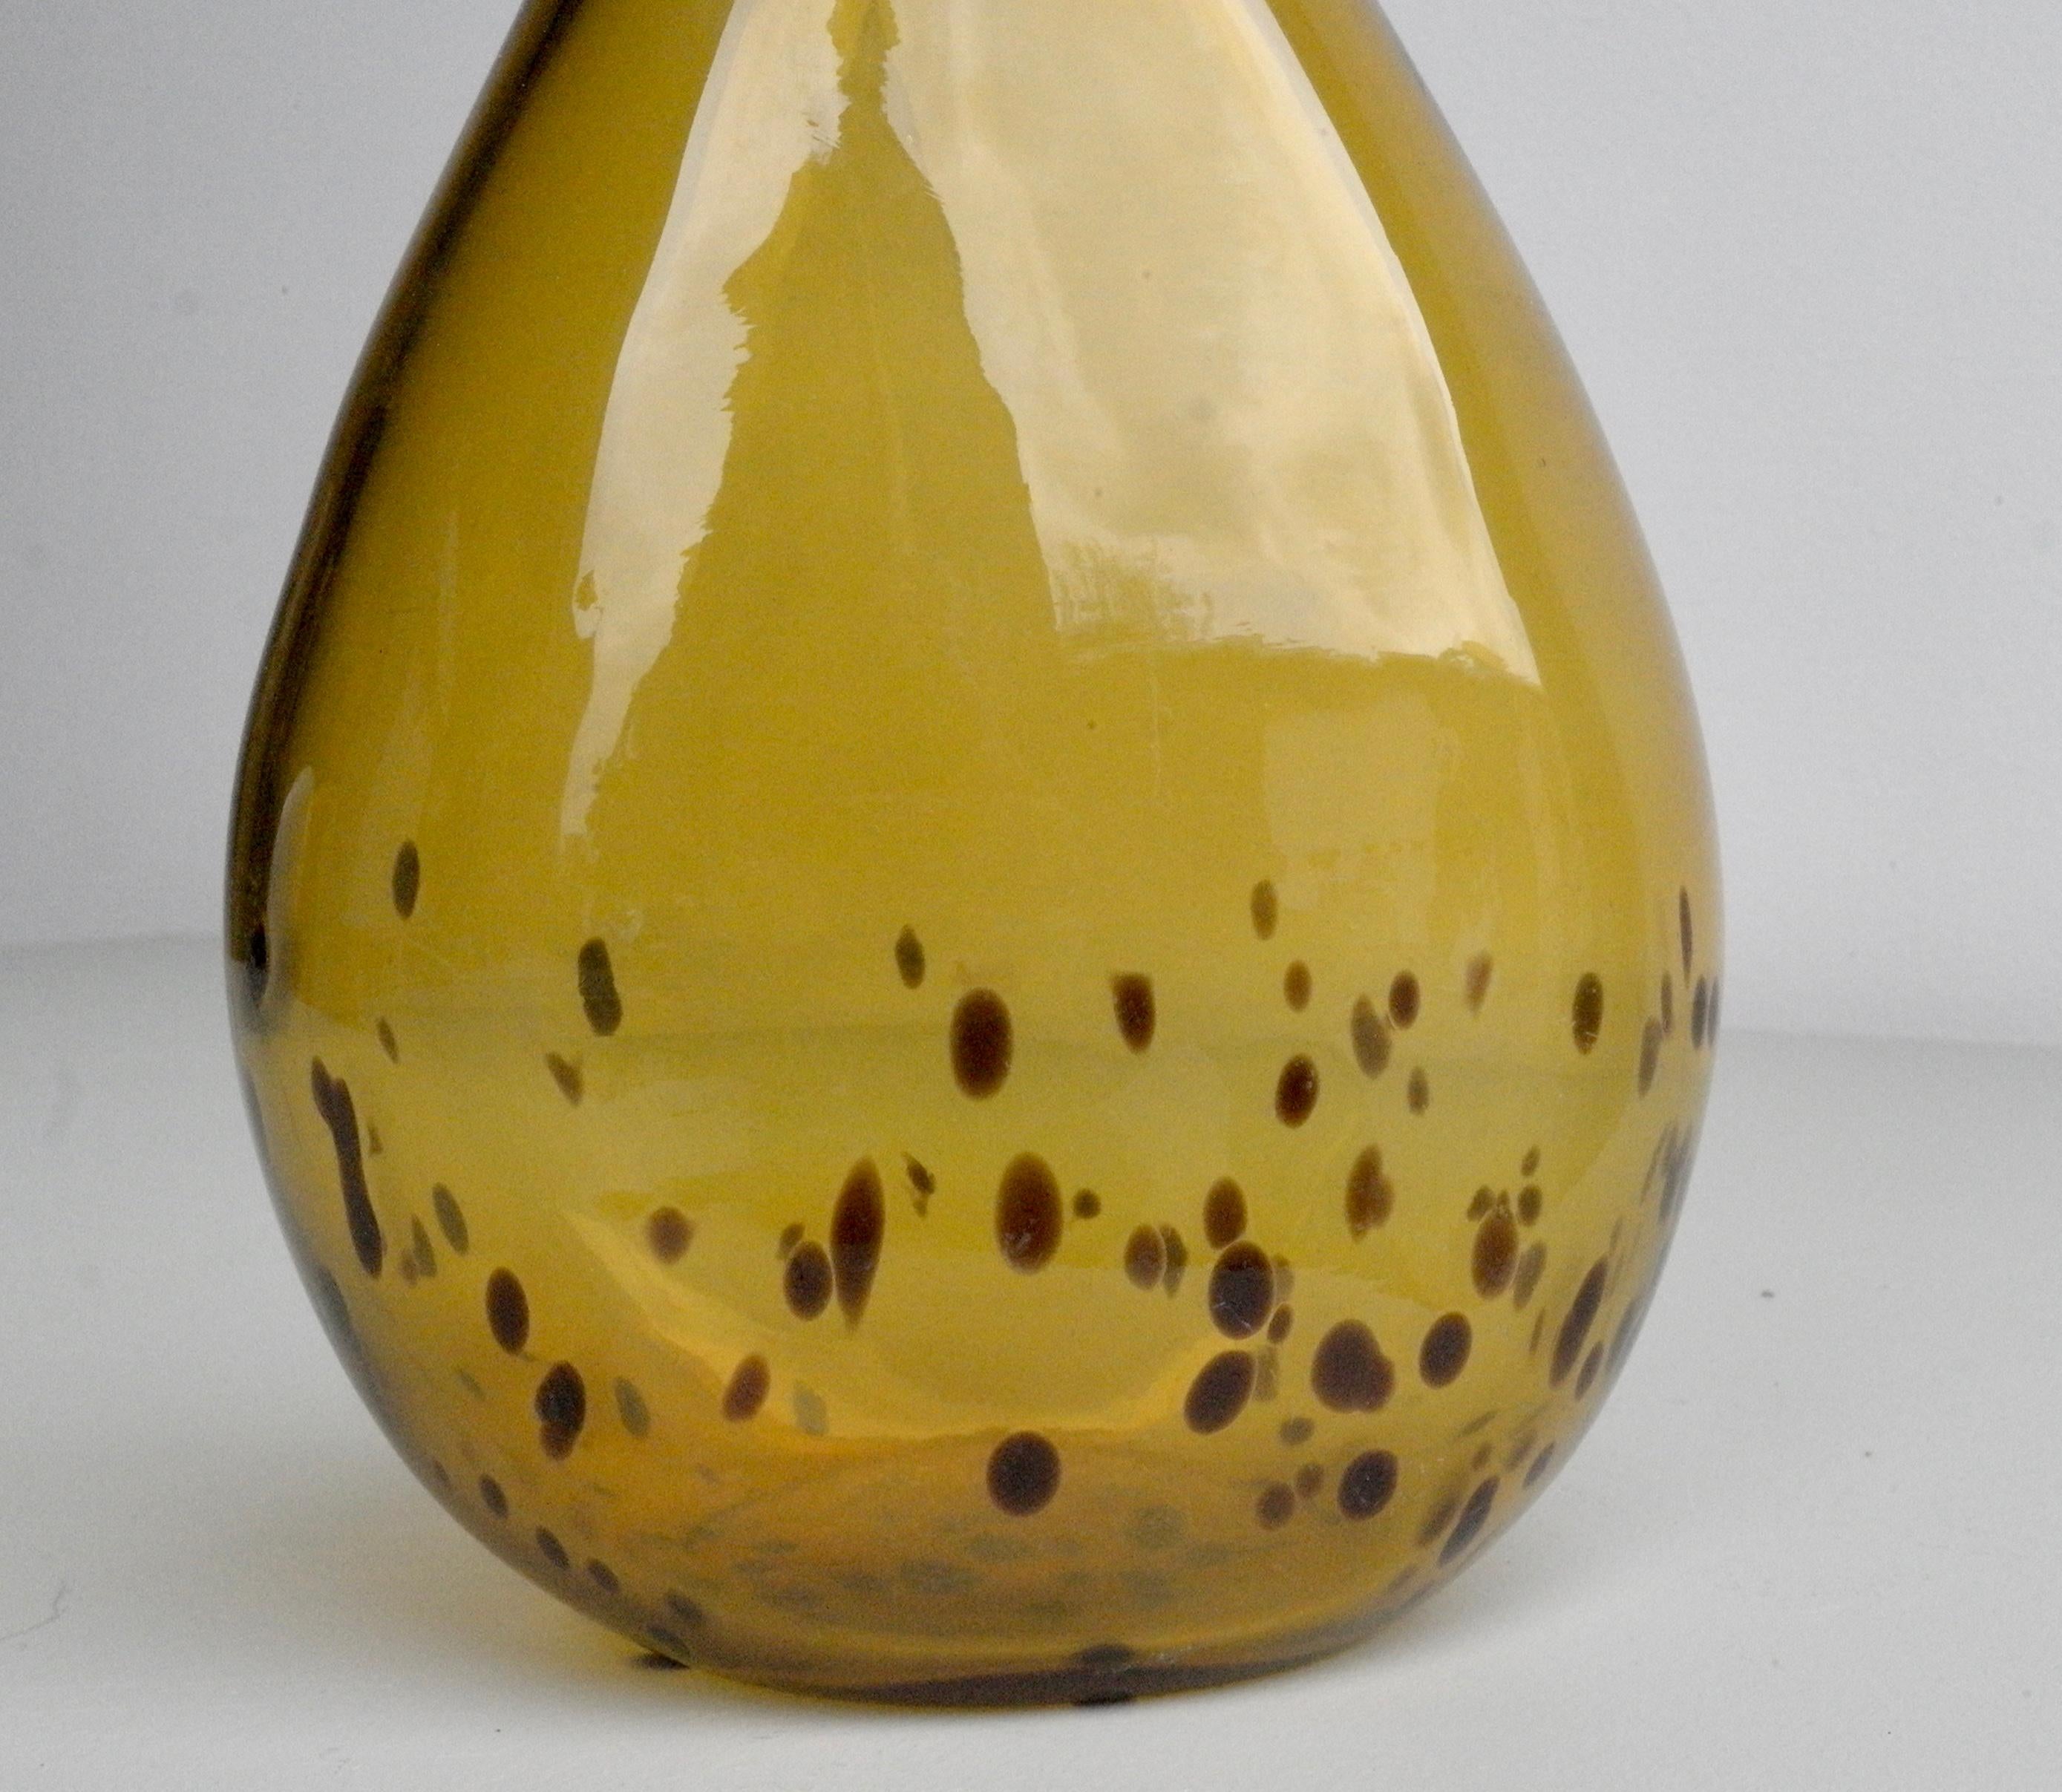 Decorative yellow and dots midcentury glass art vase, 1960s.